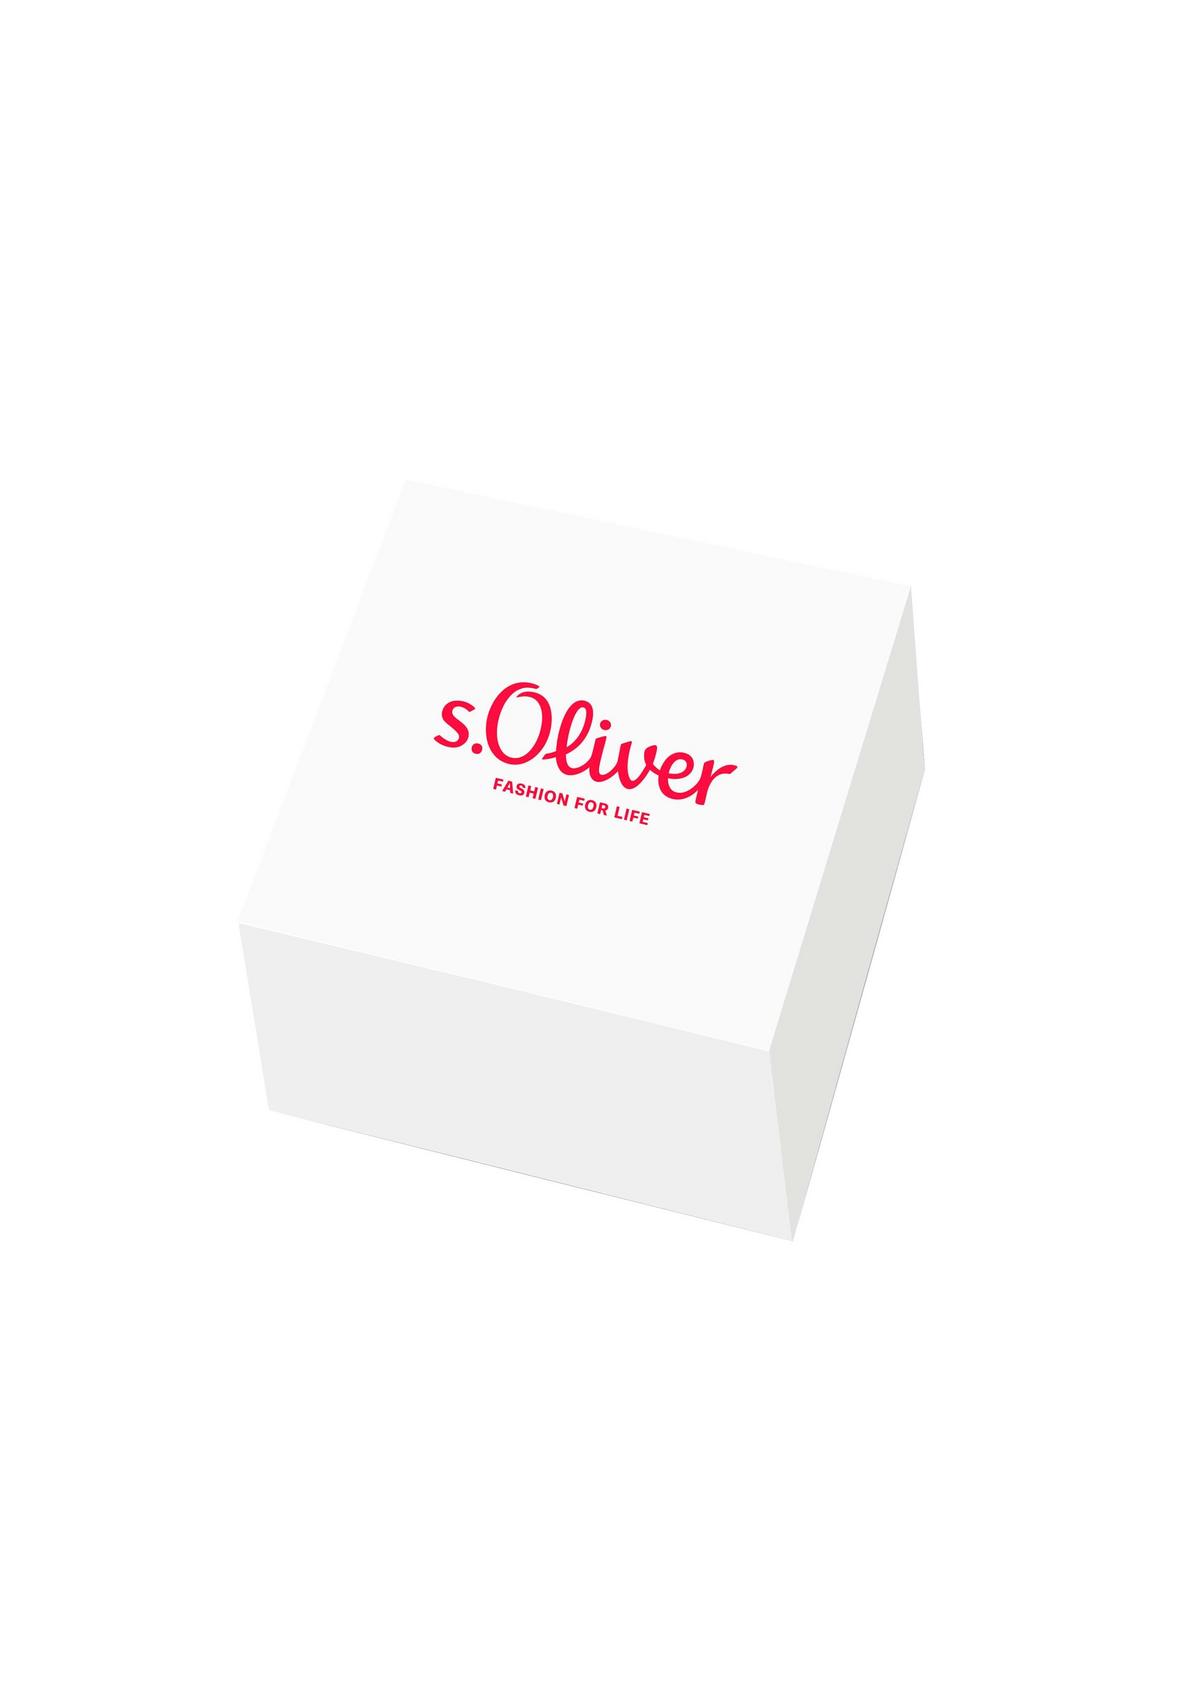 s.Oliver Oorstekers IP gold plating